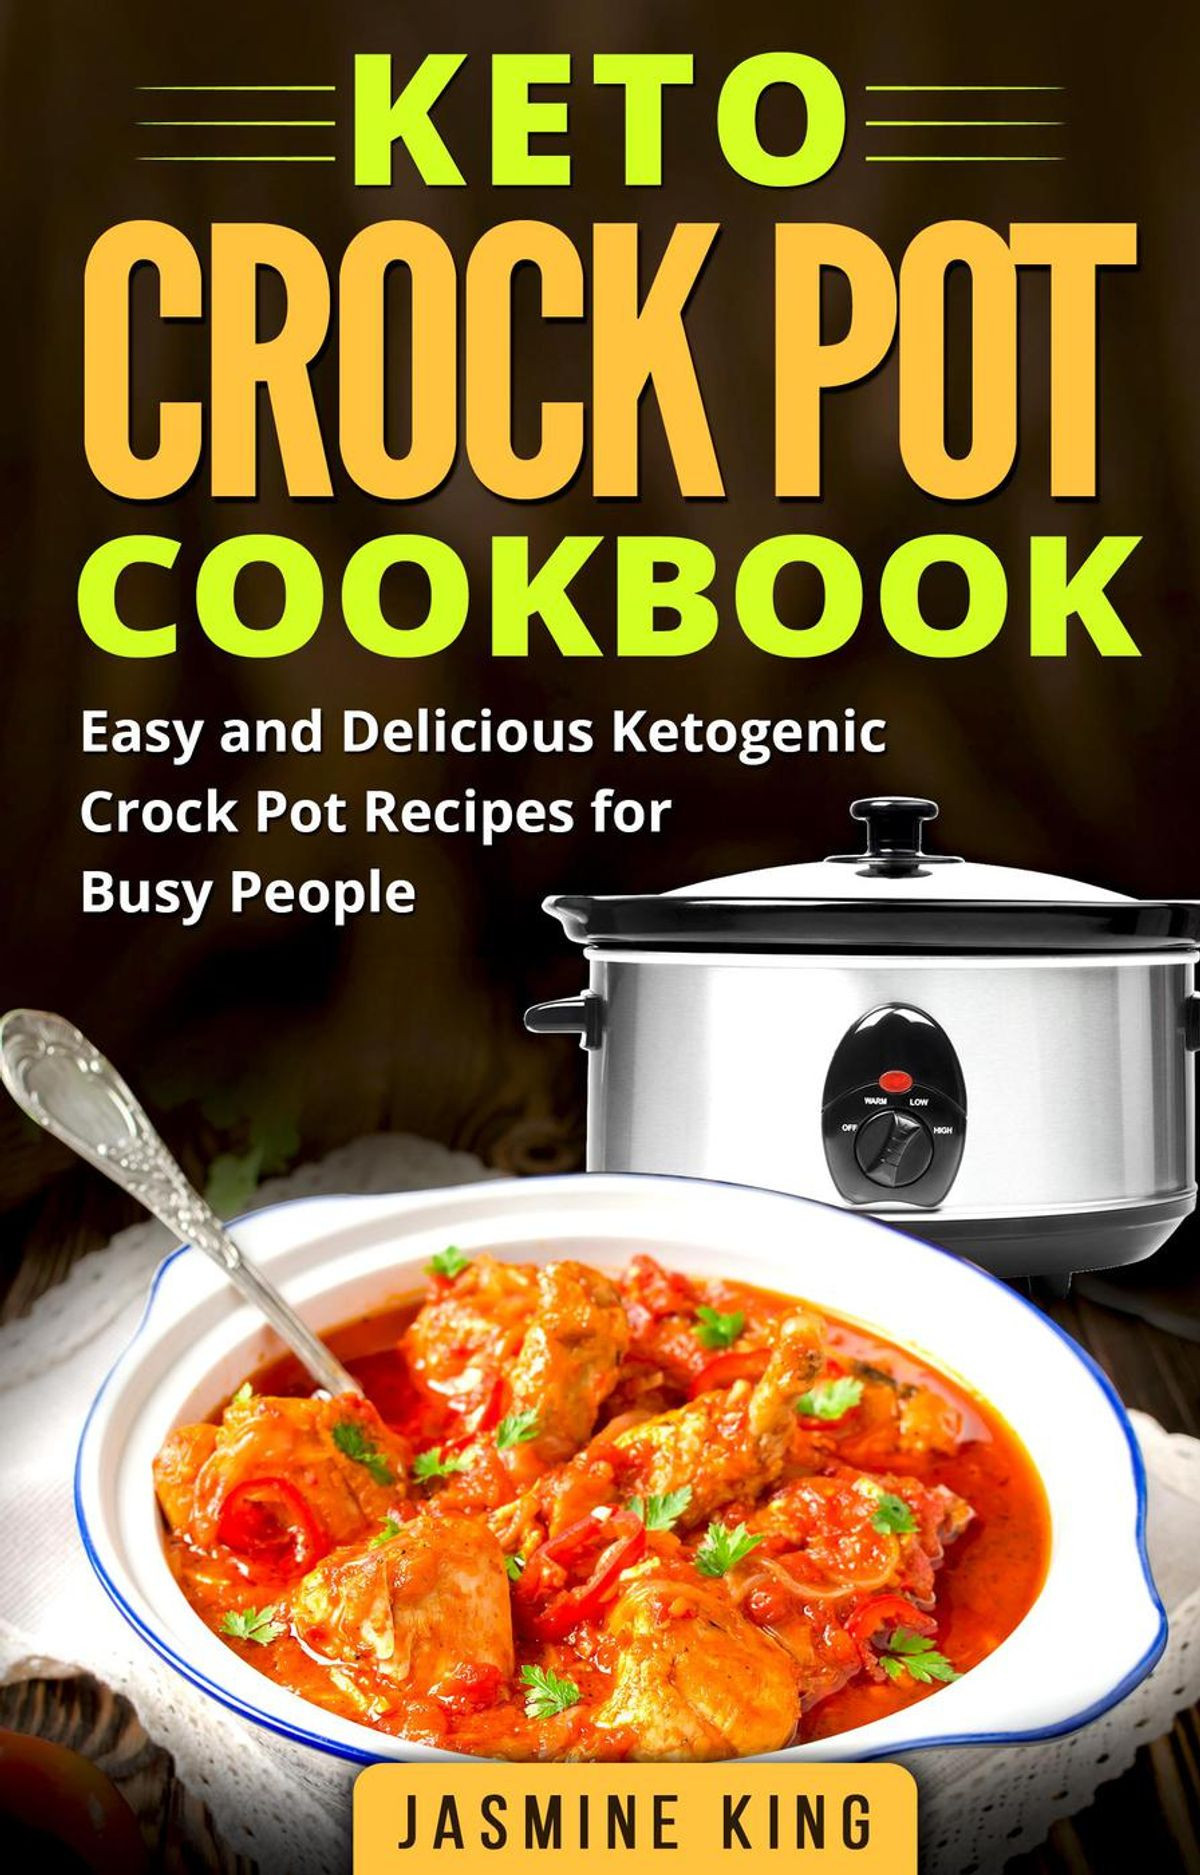 Keto Diet Recipes Easy Crock Pot
 Keto Crock Pot Cookbook Easy and Delicious Ketogenic